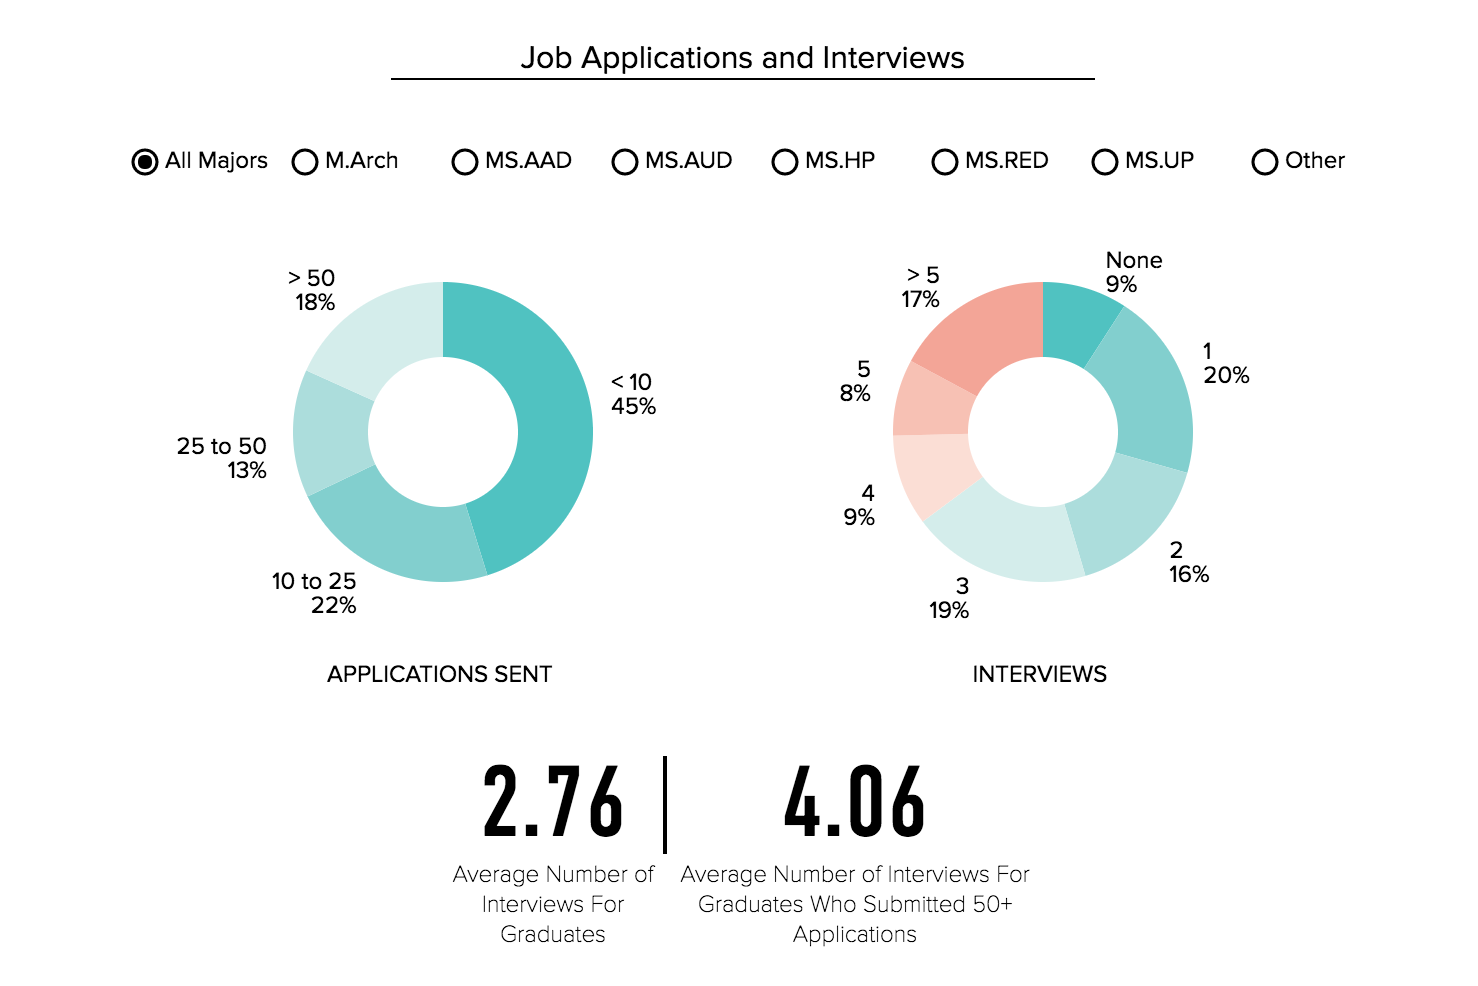 Job applications and interviews